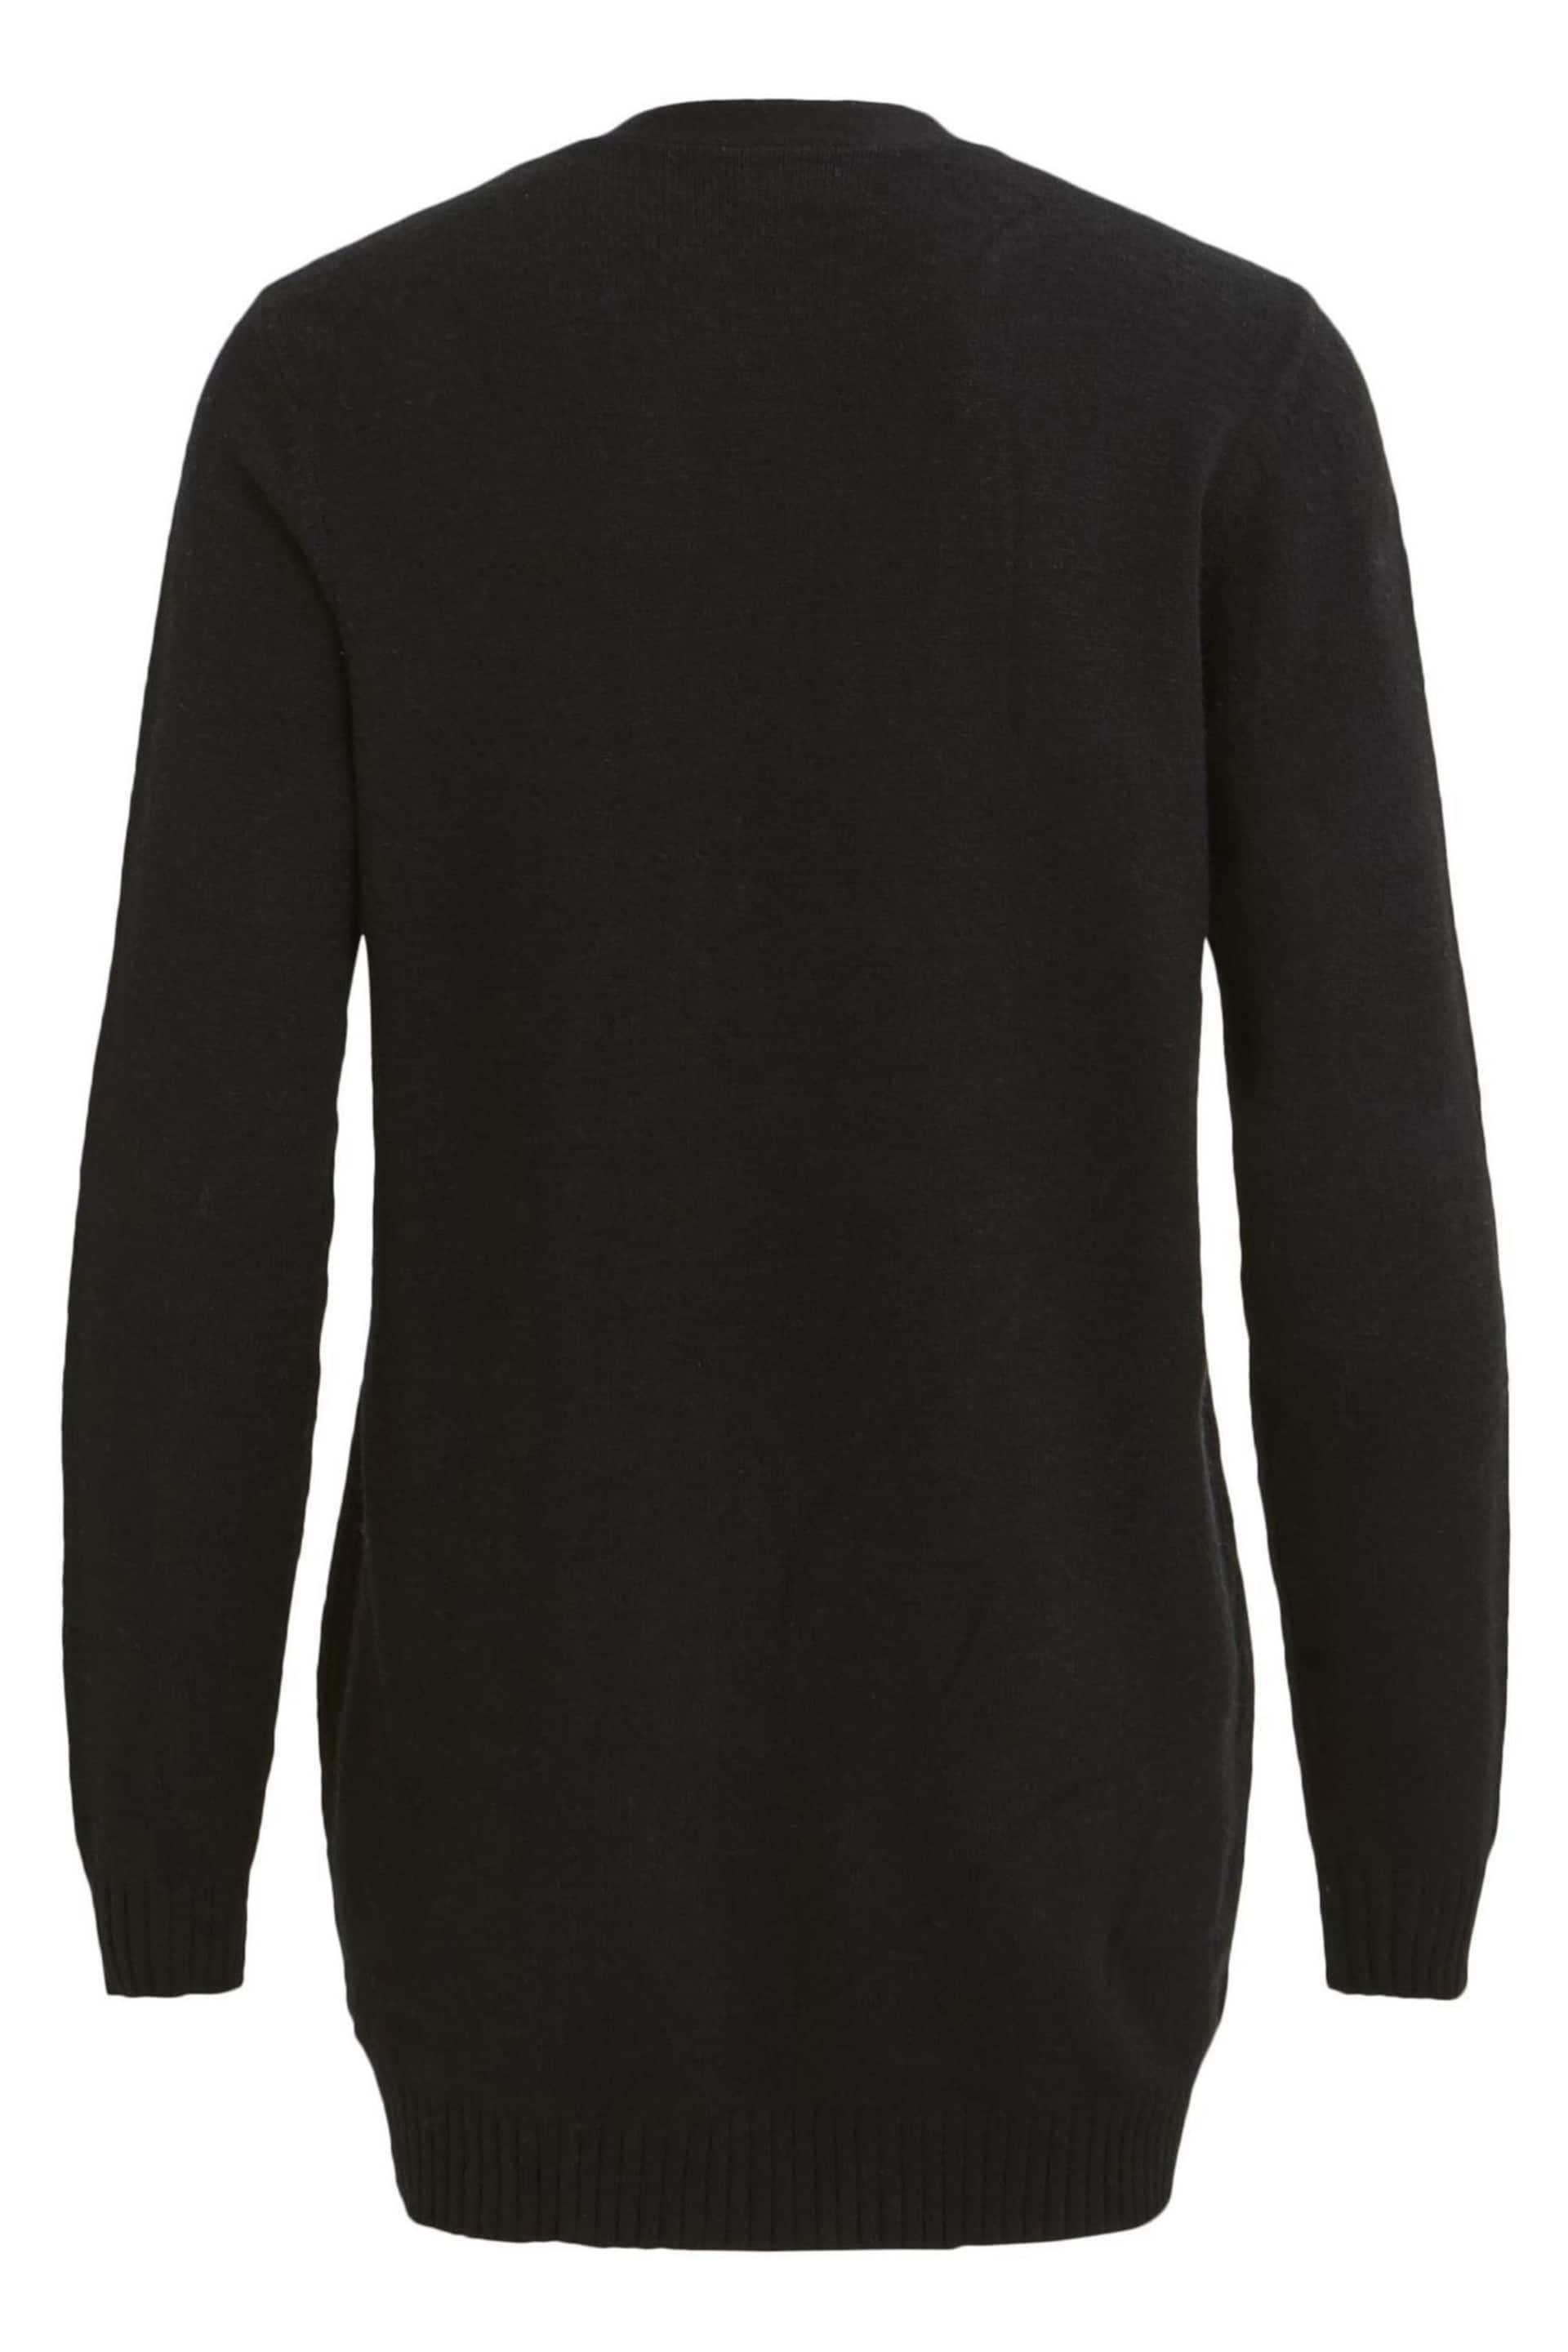 VILA Black Long Sleeve Knit Cardigan - Image 5 of 5